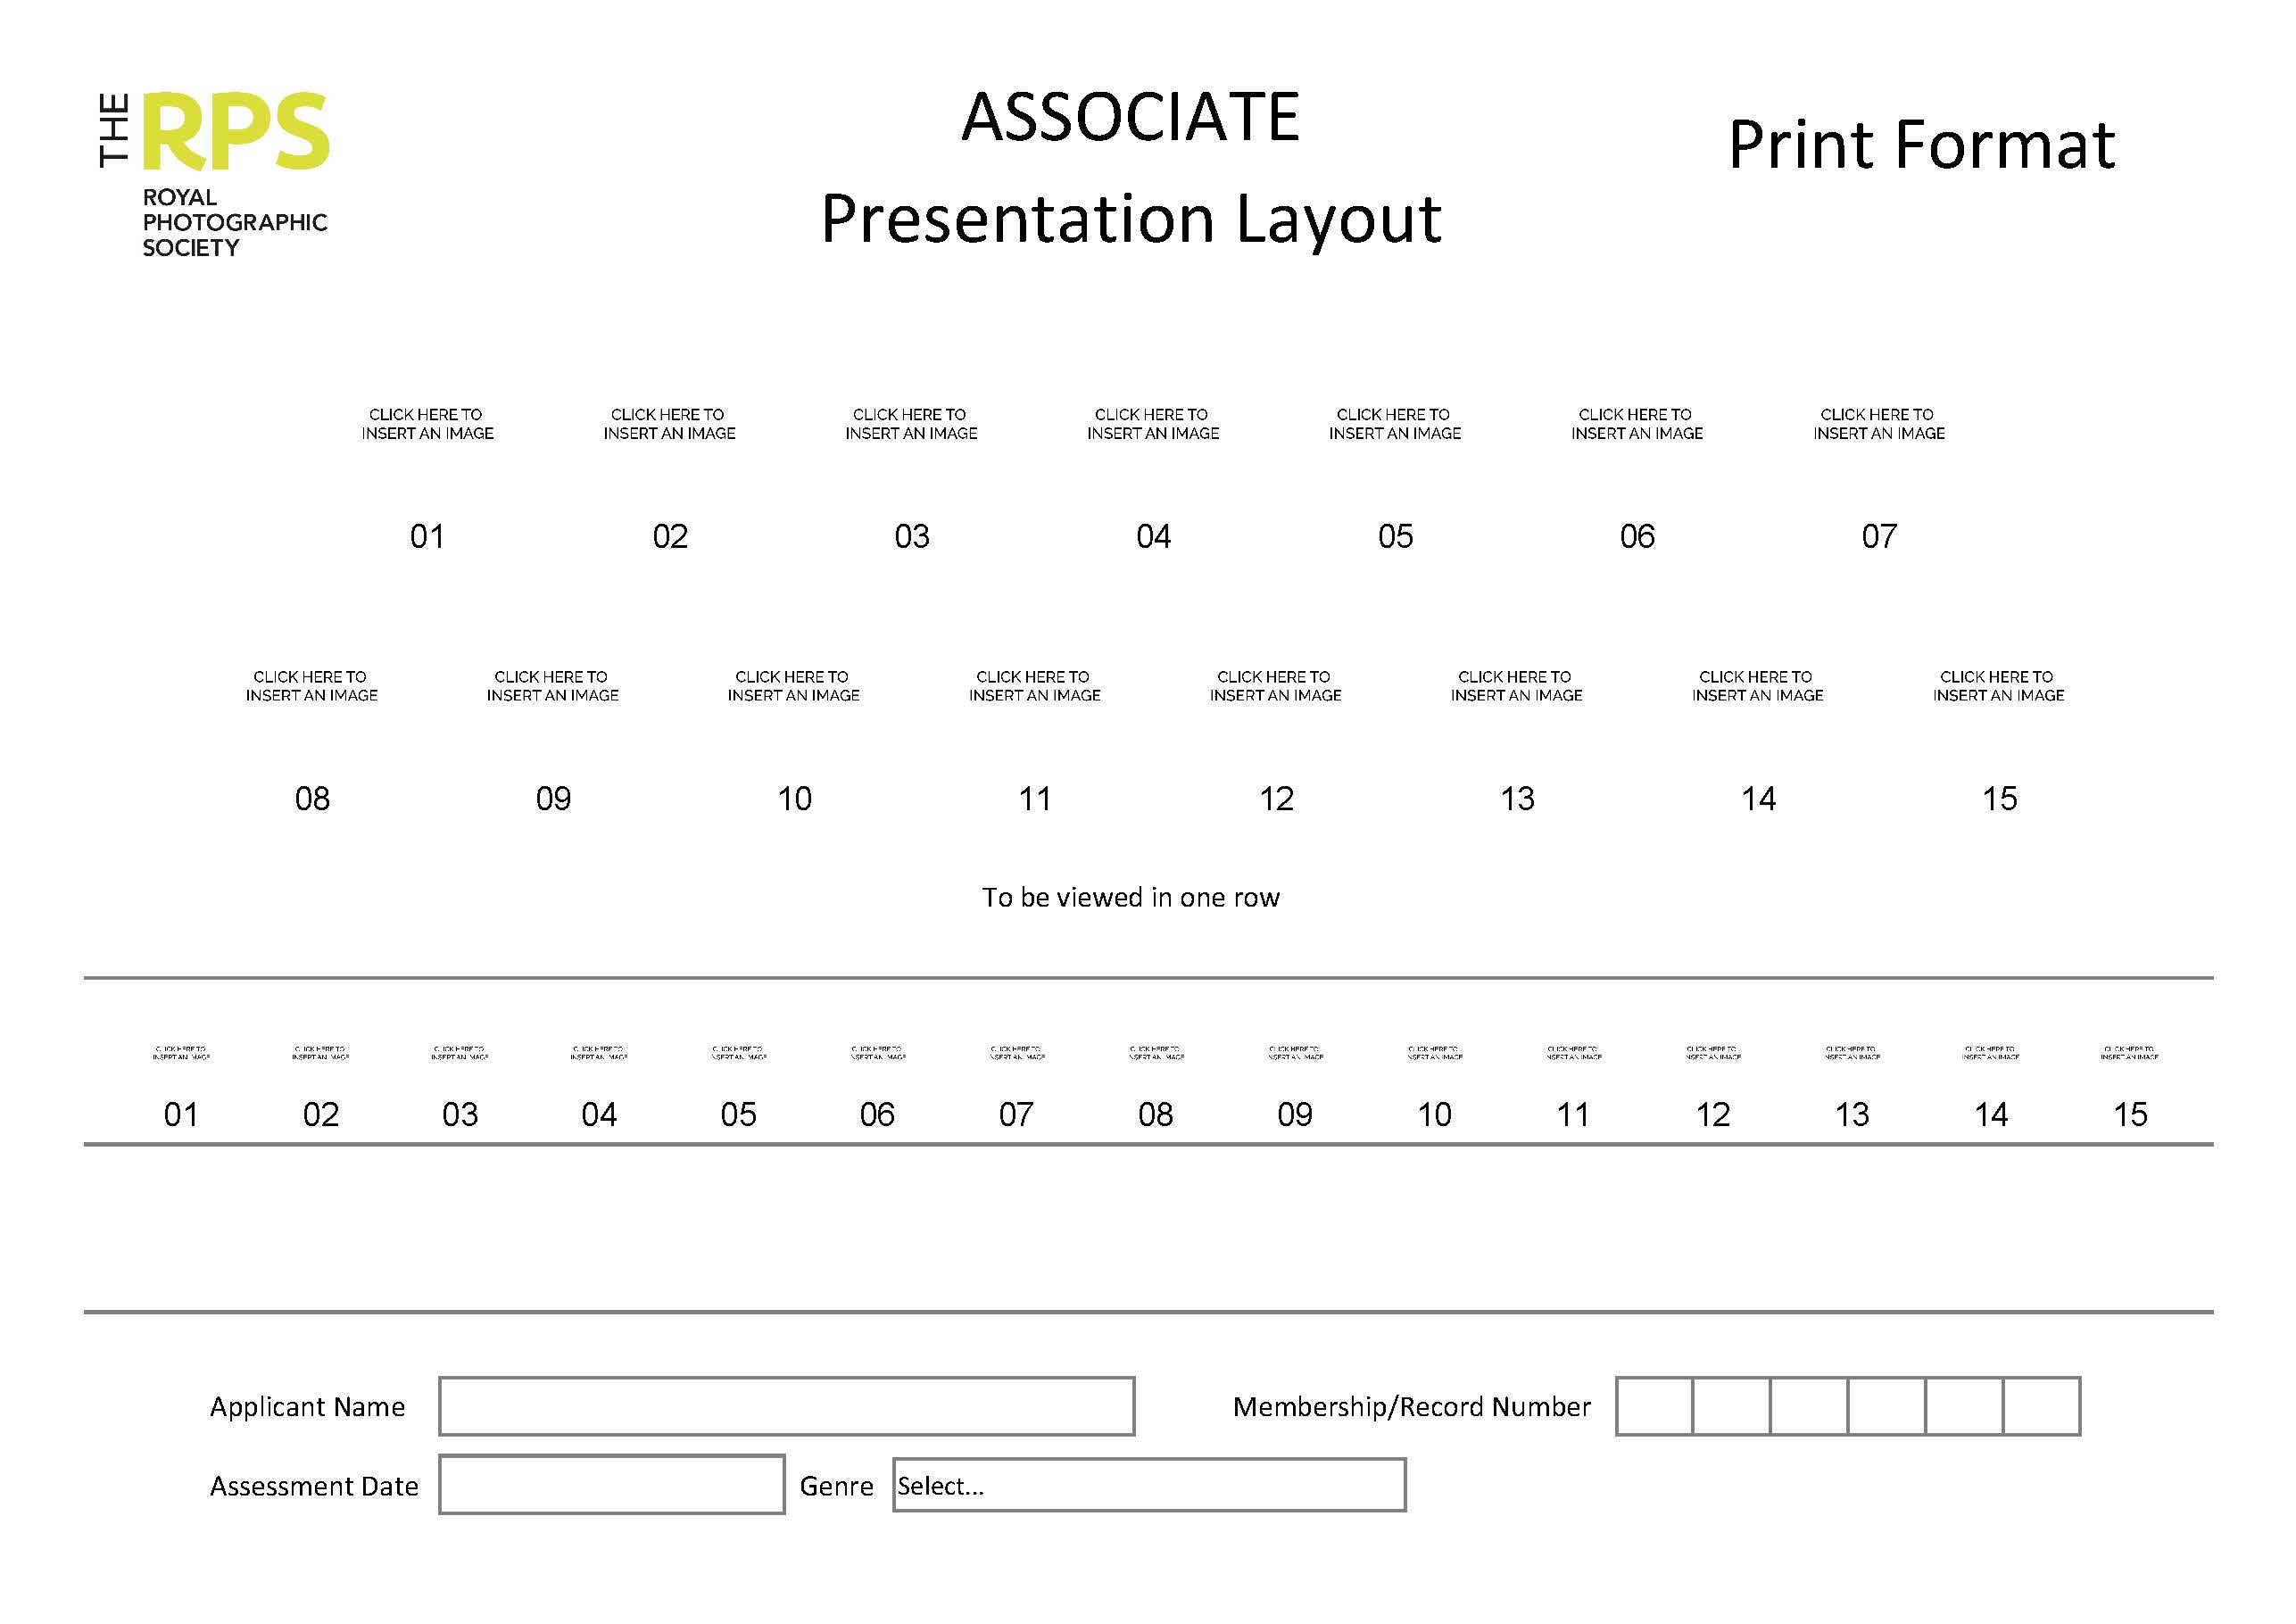 ARPS 2021 Presentation Layout 15 PRINT